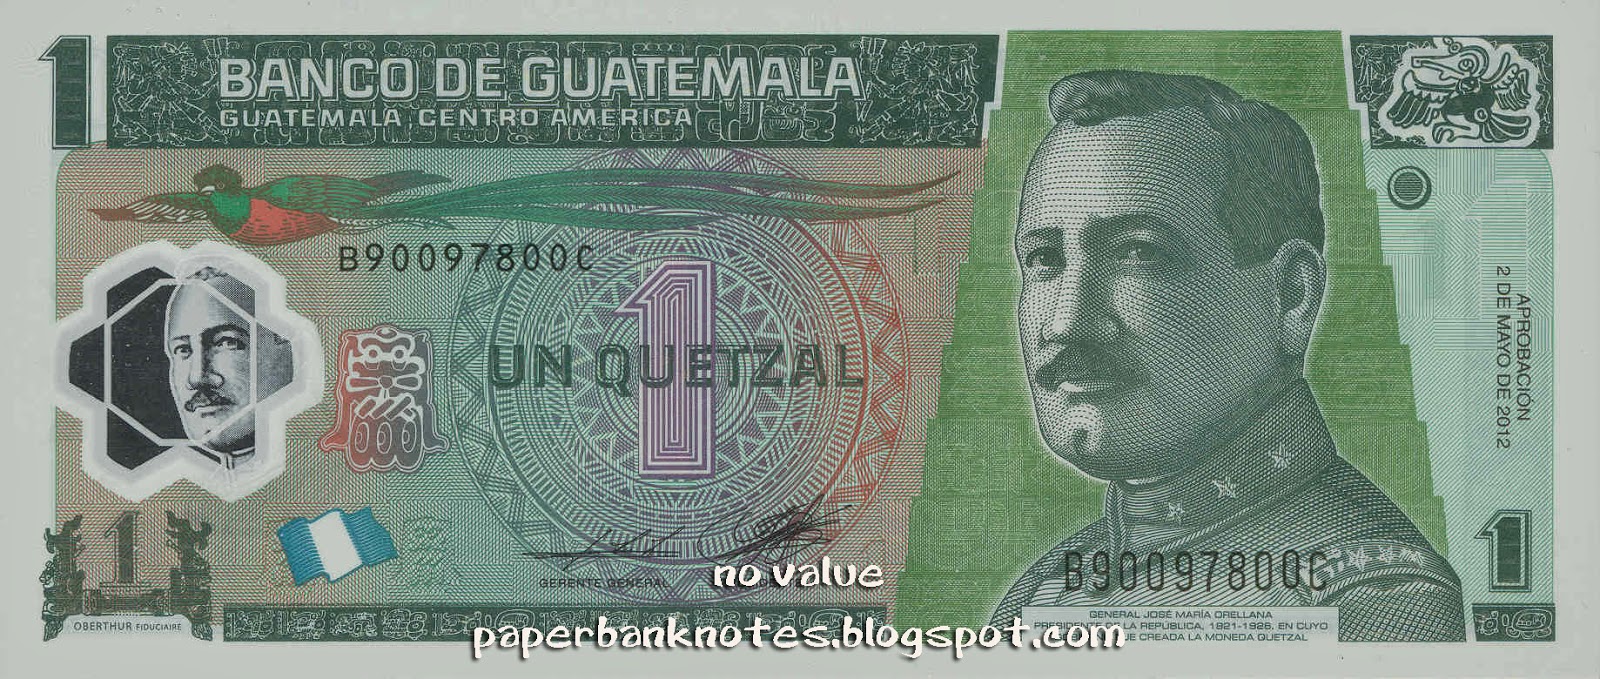 http://worldpolymernotes.blogspot.com/2007/08/guatemala.html